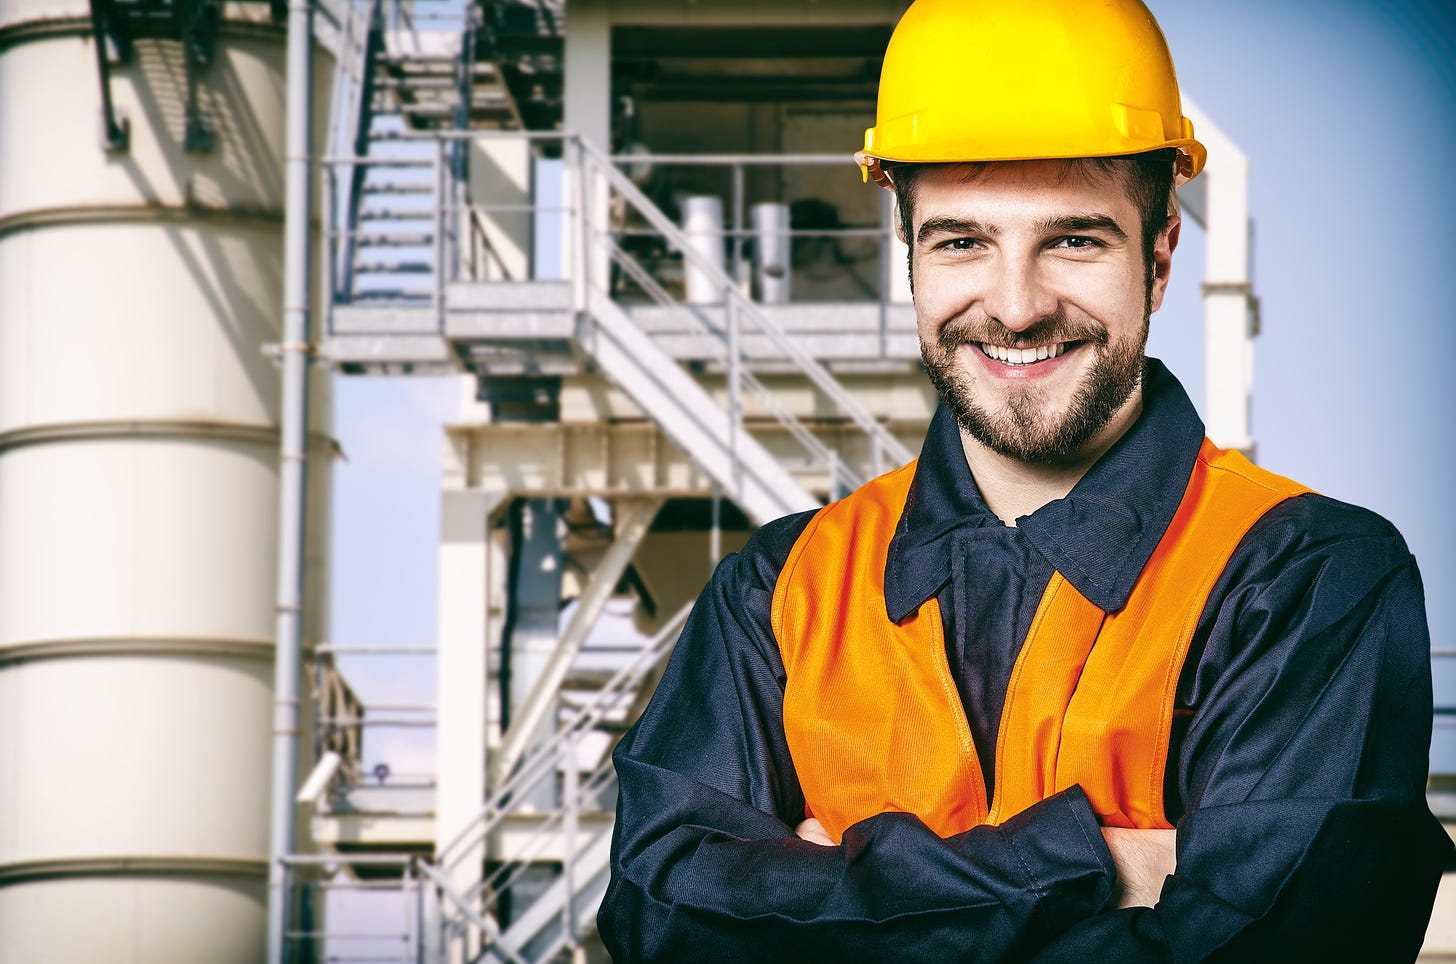 OSHA process safety management employee participation